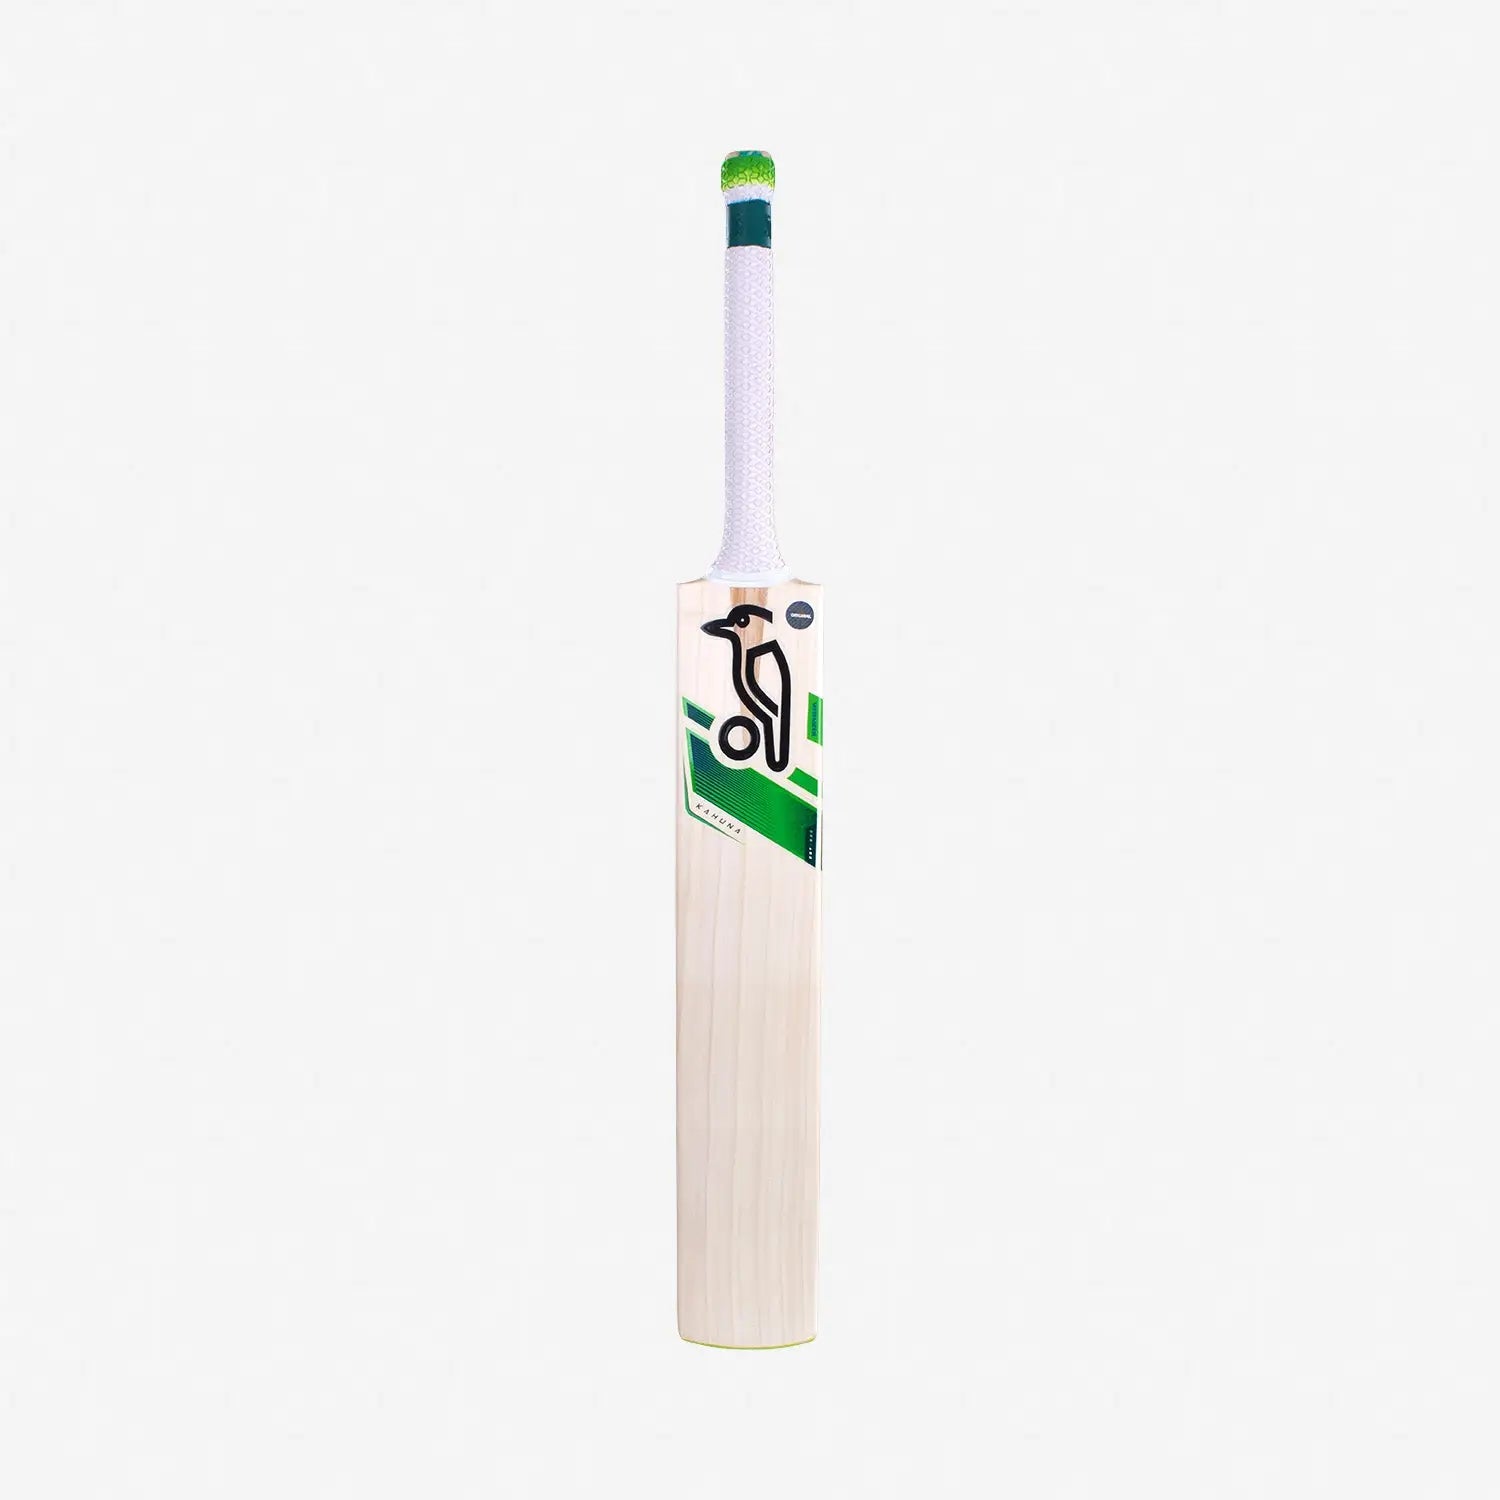 Kookaburra Kahuna 4.1 Cricket Bat English Willow - BATS - MENS ENGLISH WILLOW